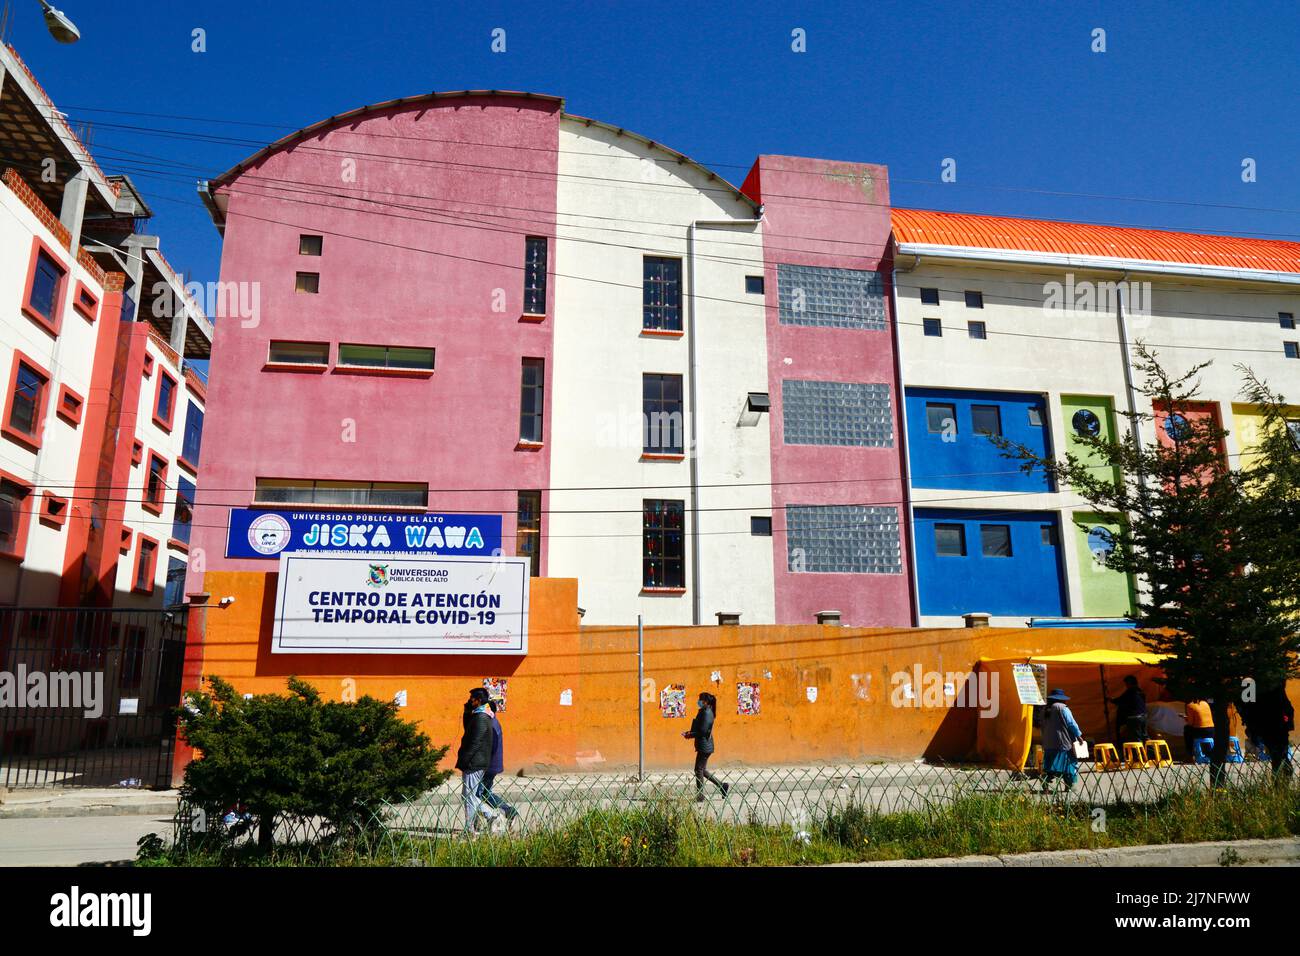 El Alto, Bolivia. April 2022. Sign outside a UPEA (Universidad Pública de El Alto) university building showing the location of a temporary covid-19 treatment centre. Stock Photo